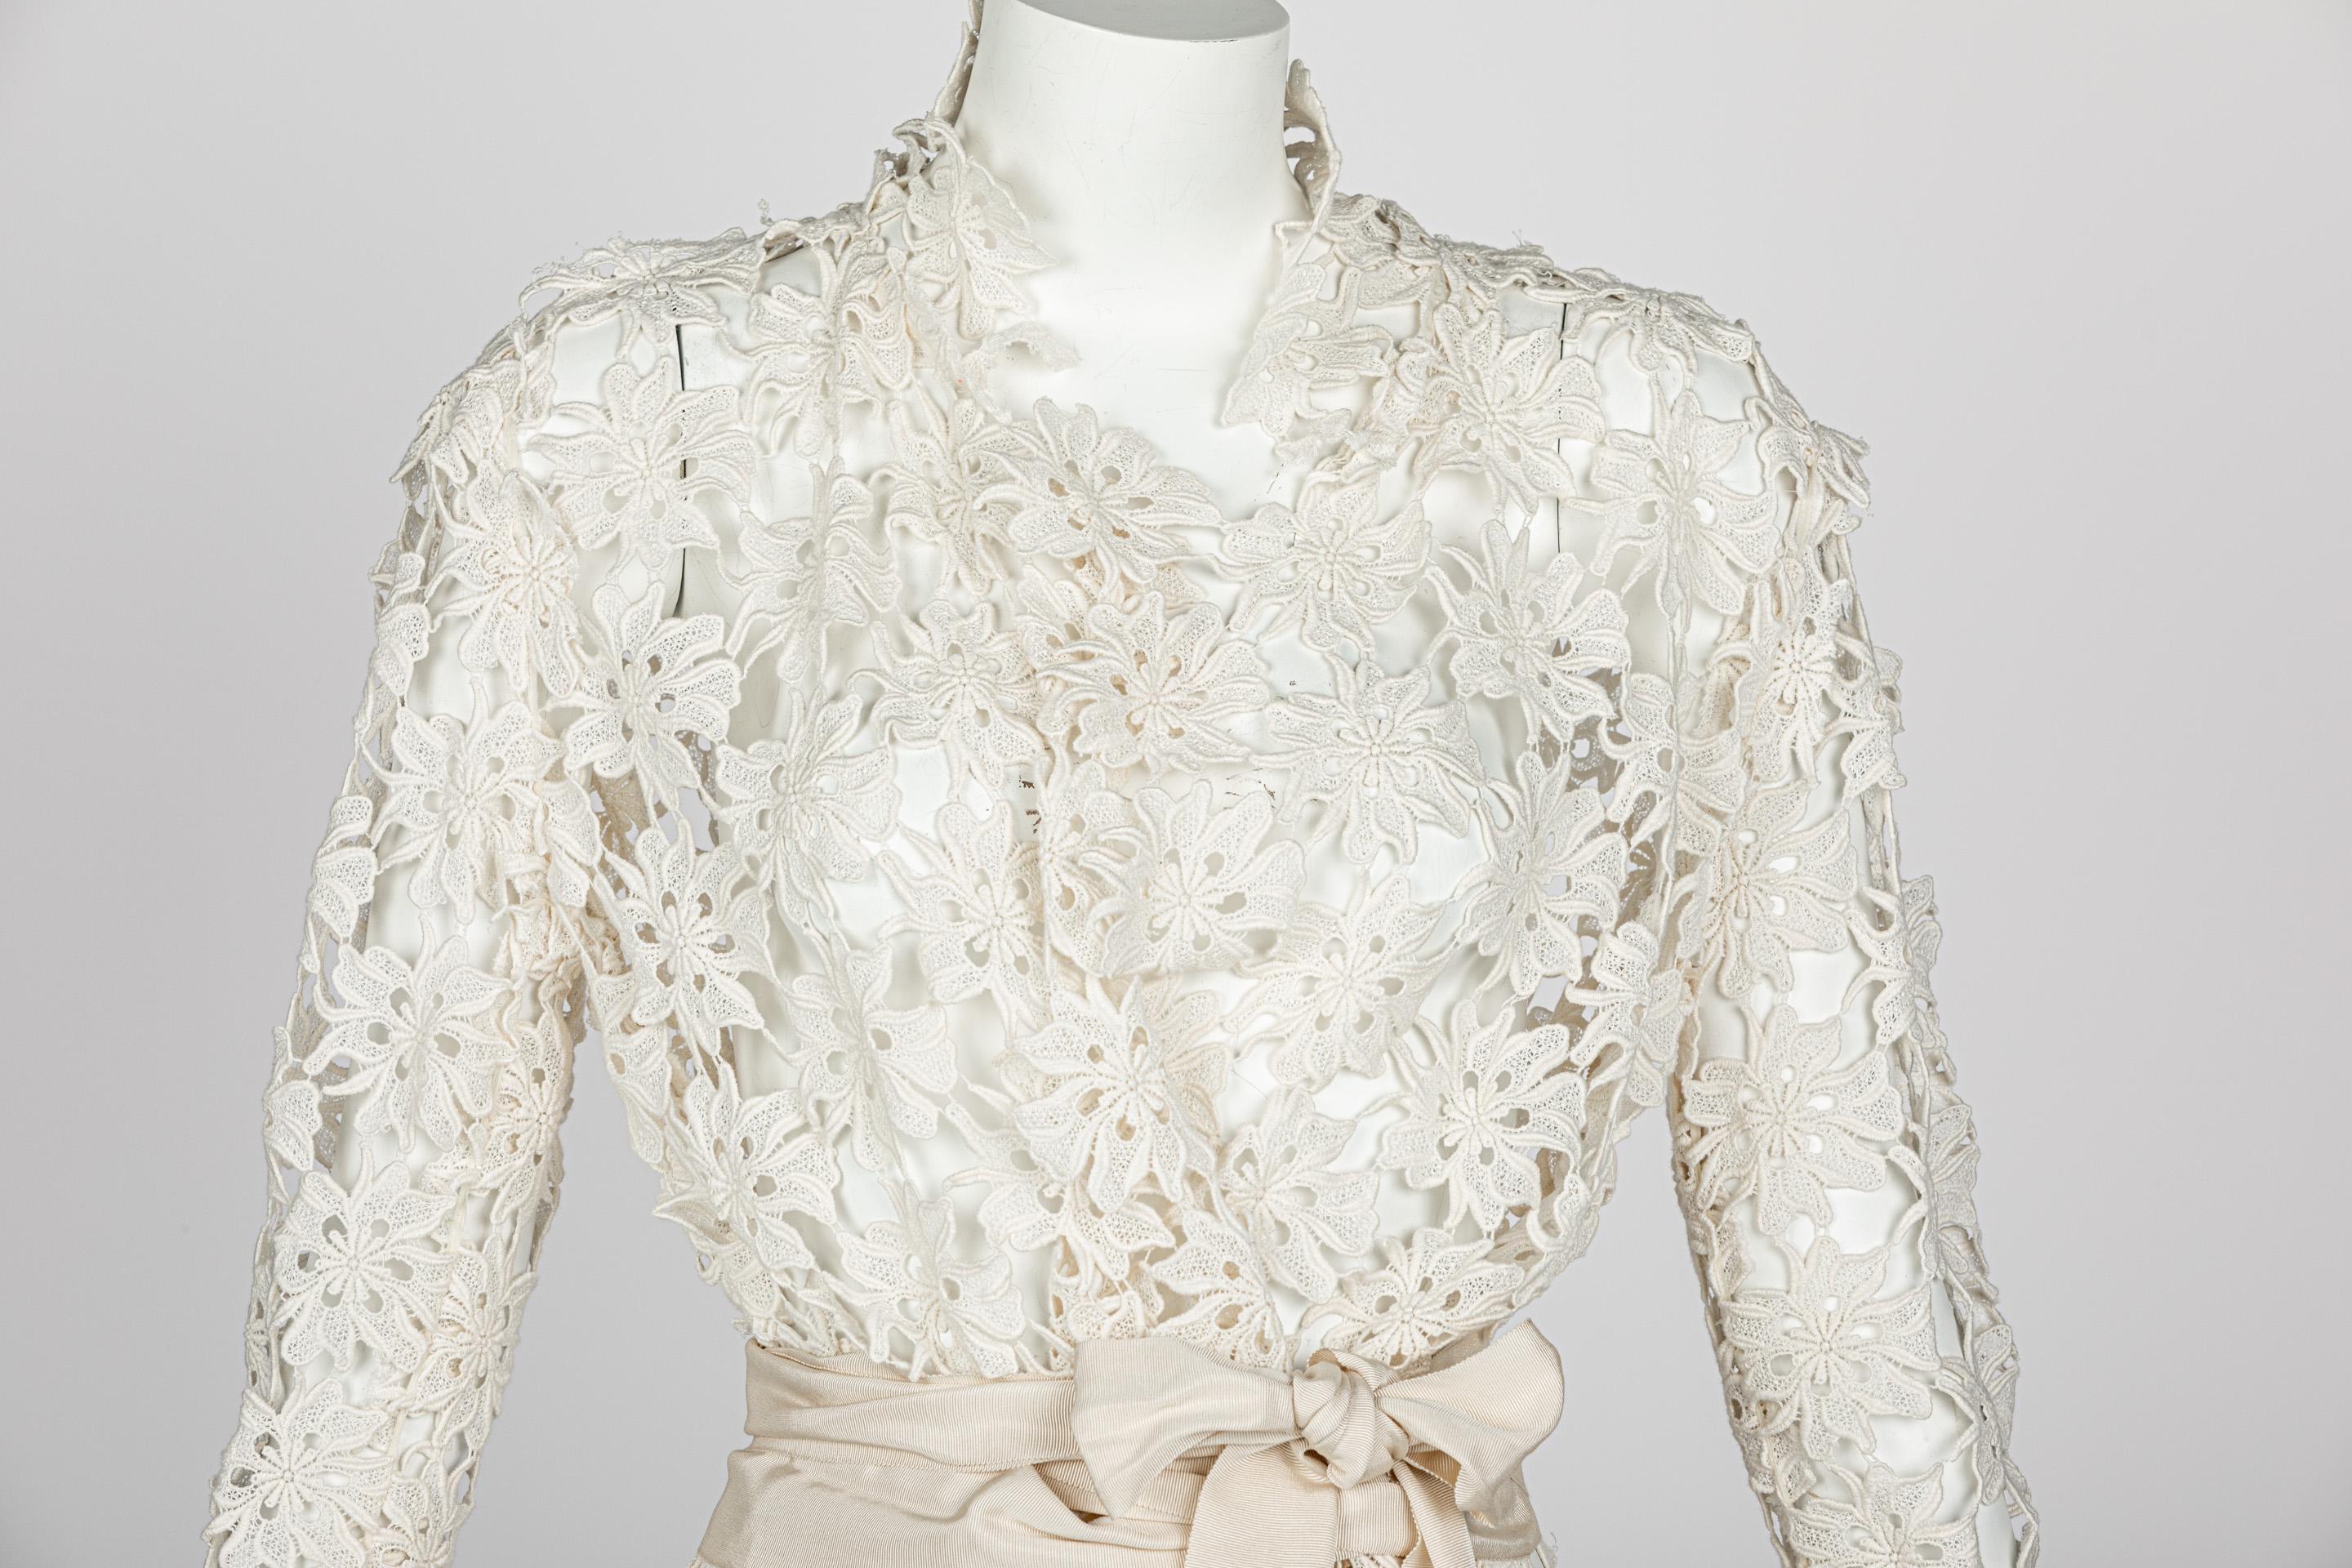 Lanvin Alber Elbaz Collection Blanche Ivory Guipure Lace Coat 2013 1